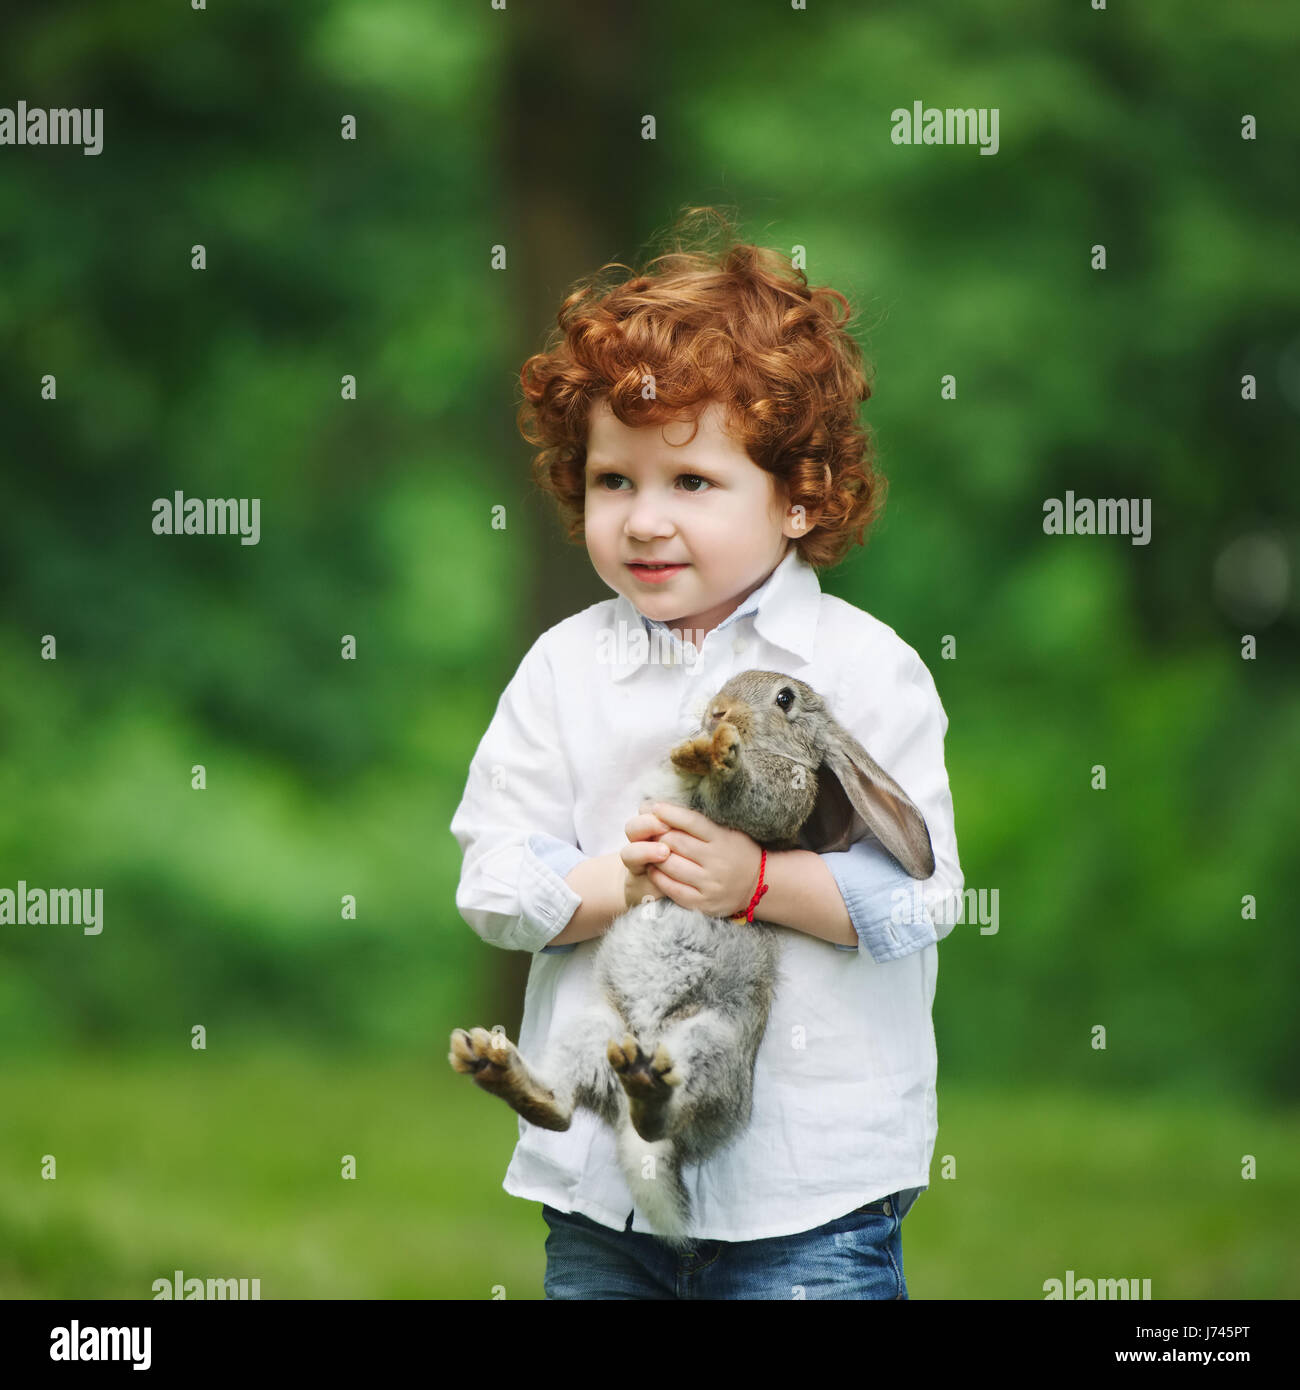 little boy with rabbit on grass Stock Photo